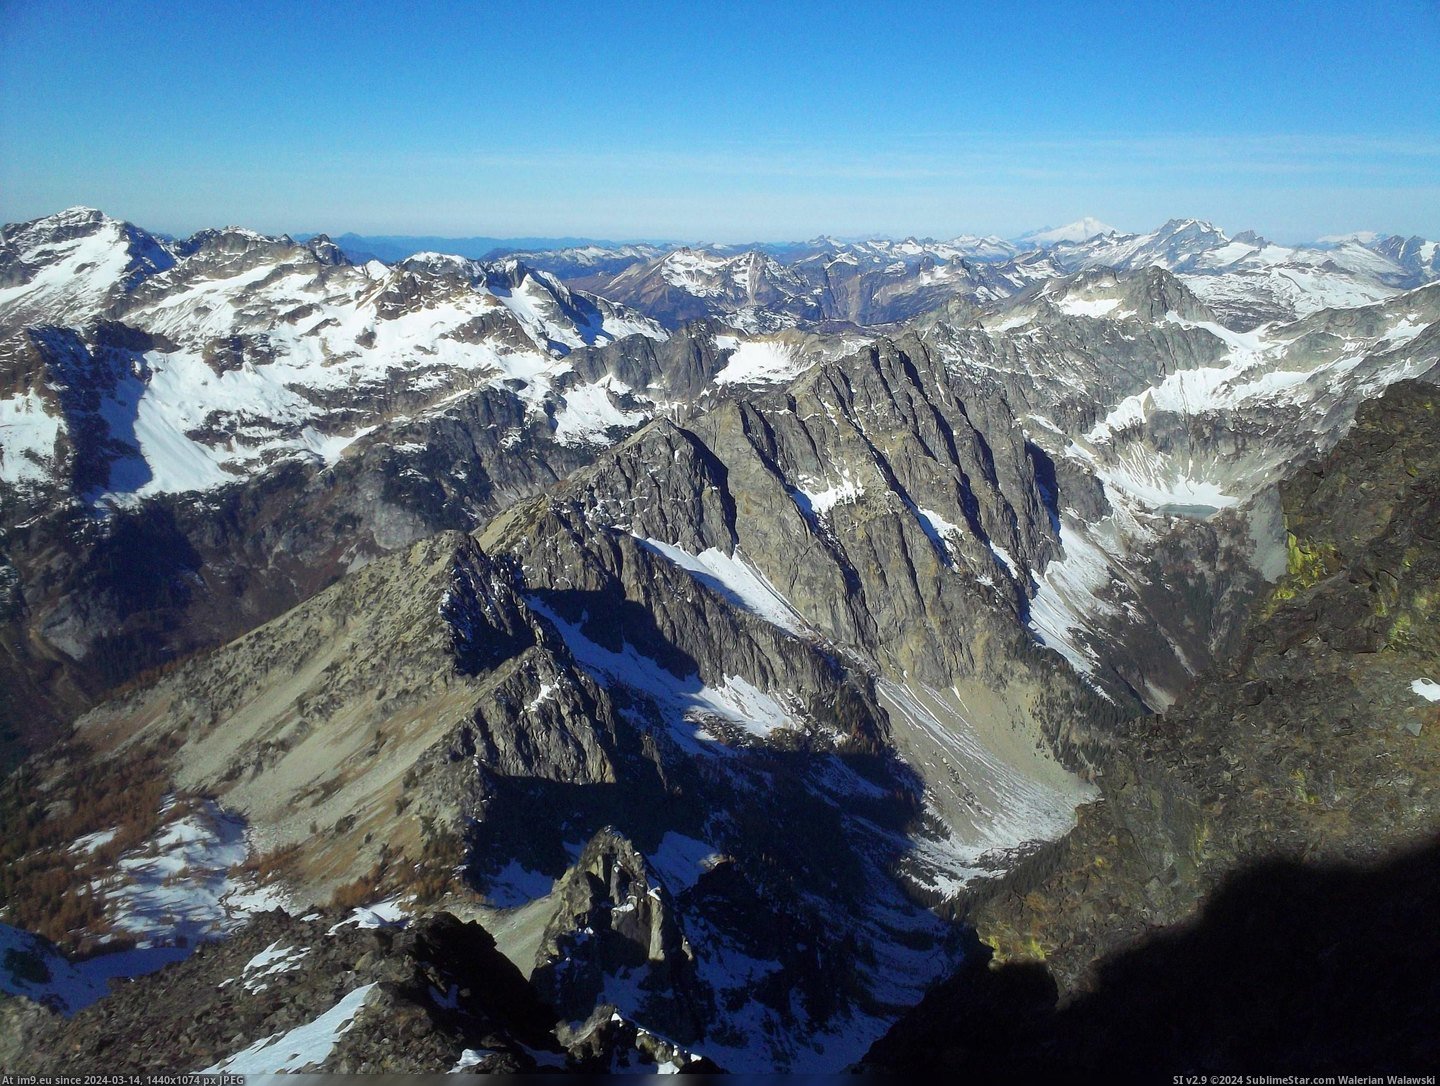 #Range #Jack #Cascade #2800x2100 #Fingered #Summit [Earthporn] Cascade Range from the summit of Seven Fingered Jack - 9101' - [2800x2100][OC] Pic. (Изображение из альбом My r/EARTHPORN favs))